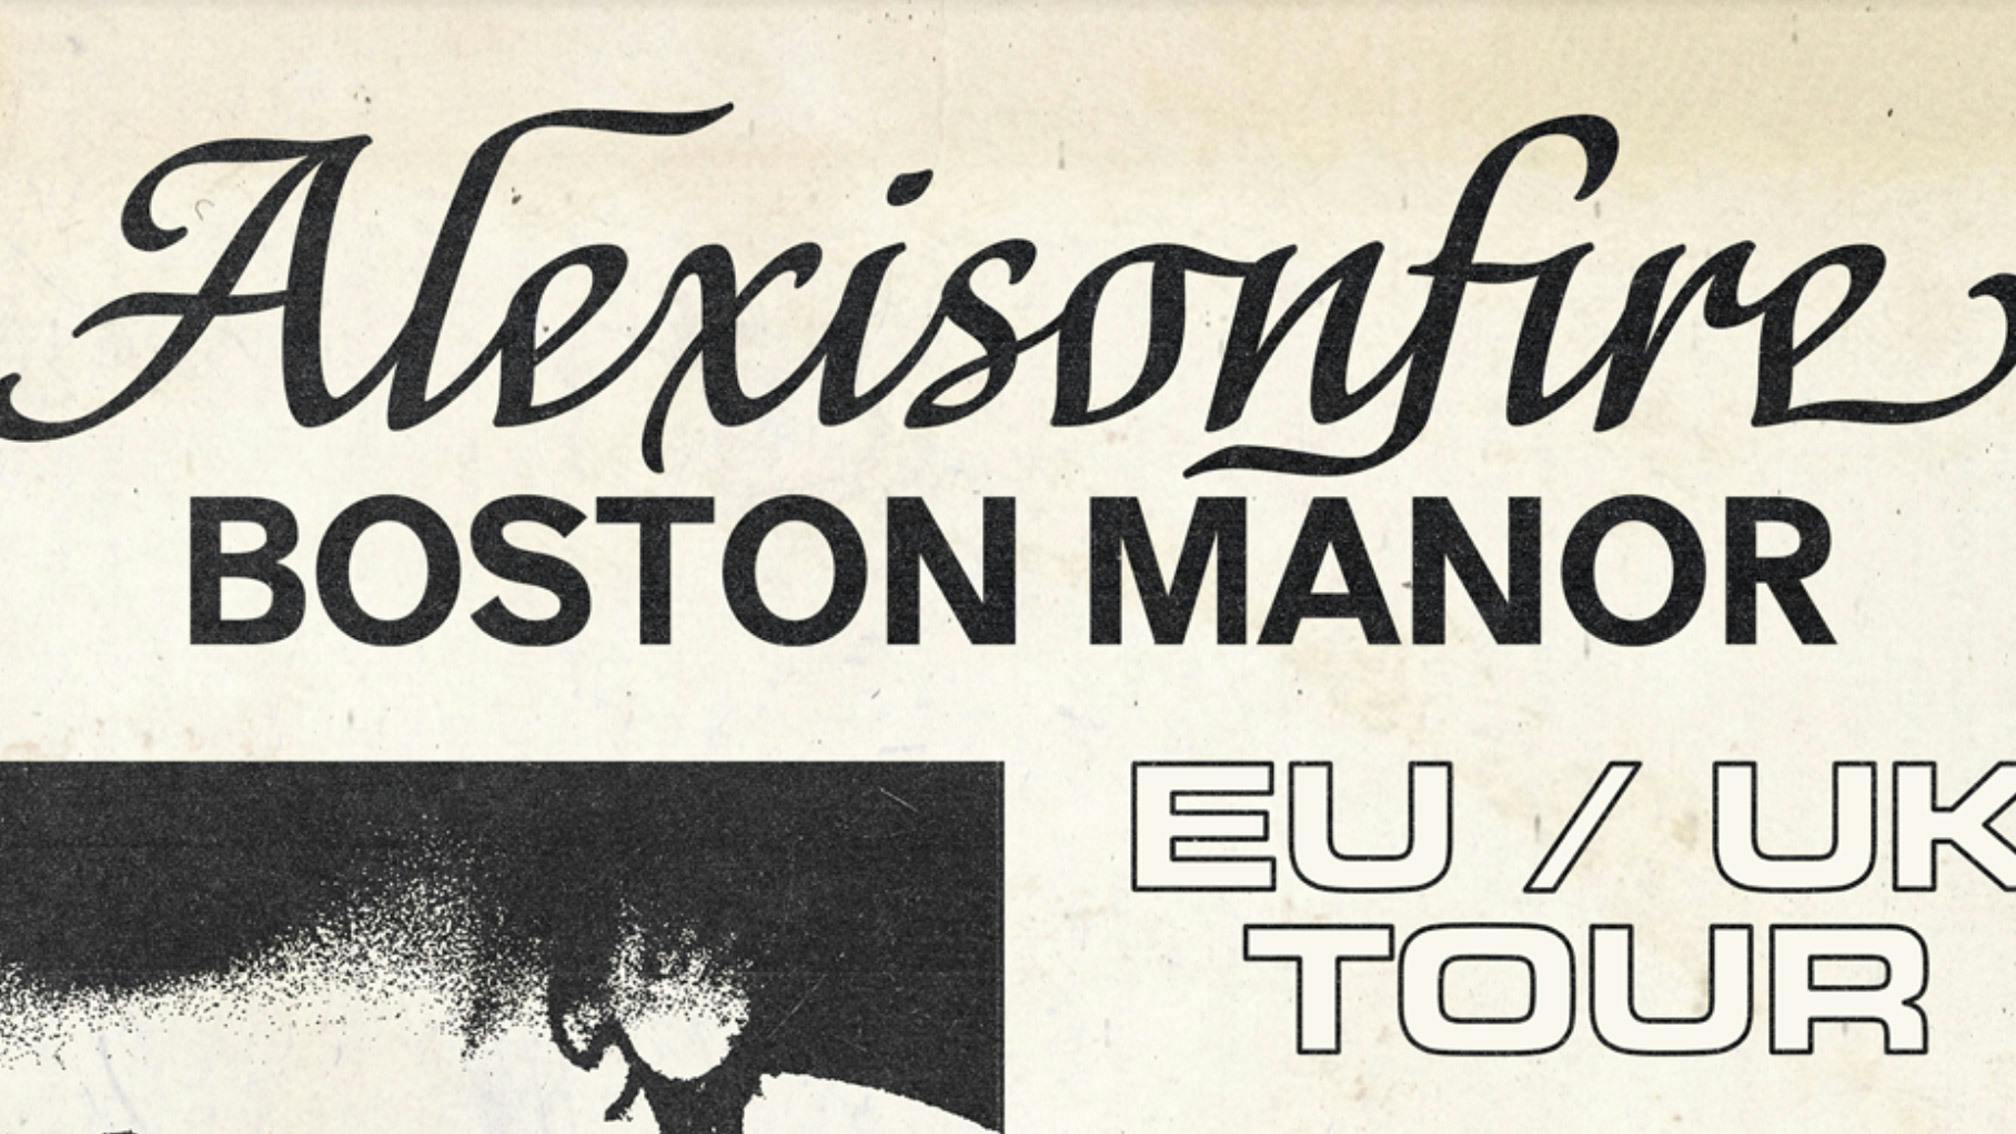 Alexisonfire announce UK / European shows with Boston Manor